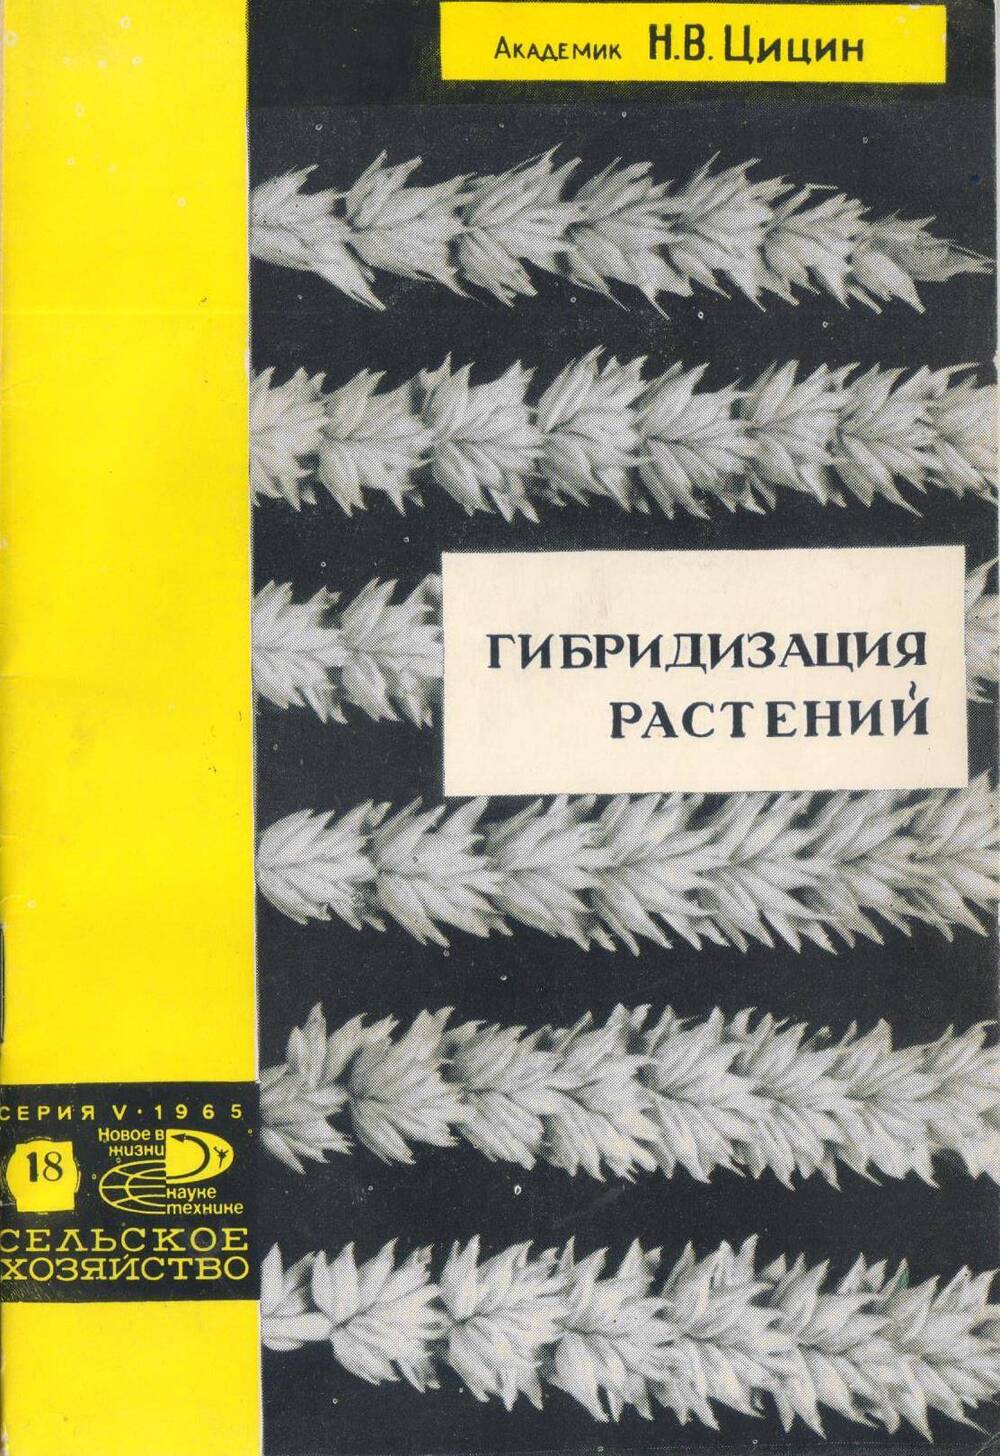 Академик Н.В. Цицин. Гибридизация растений. Издательство Знание. Москва 1965.